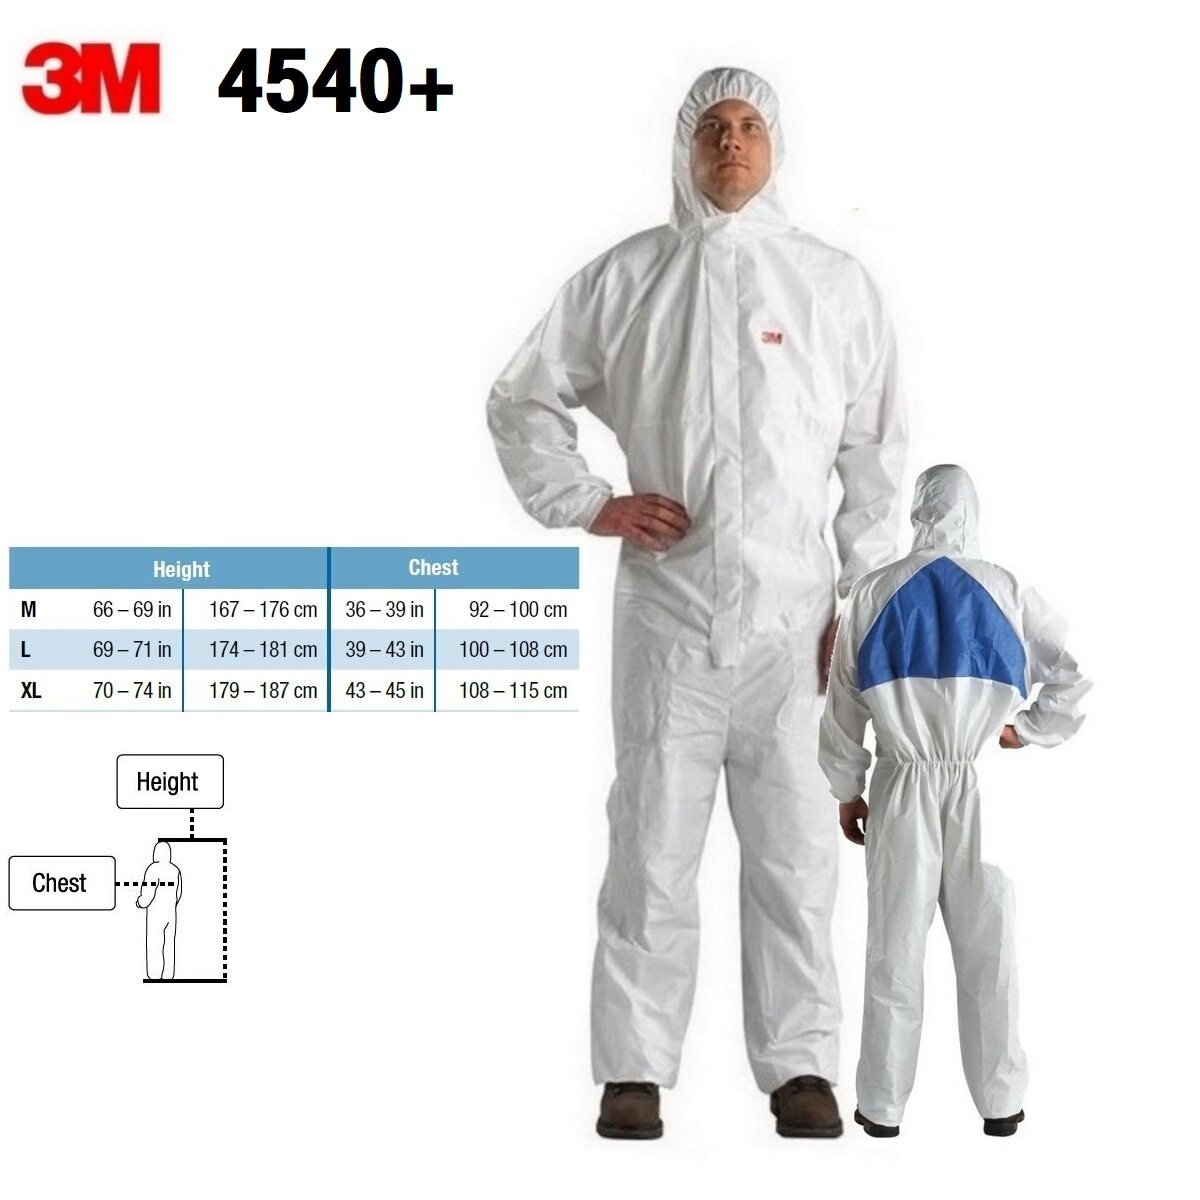 3M 4540+ Coverall ชุดป้องกันสารเคมีและฝุ่นละออง พร้อมช่องระบายอากาศ (มีขนาด M, L, XL ให้เลือก)